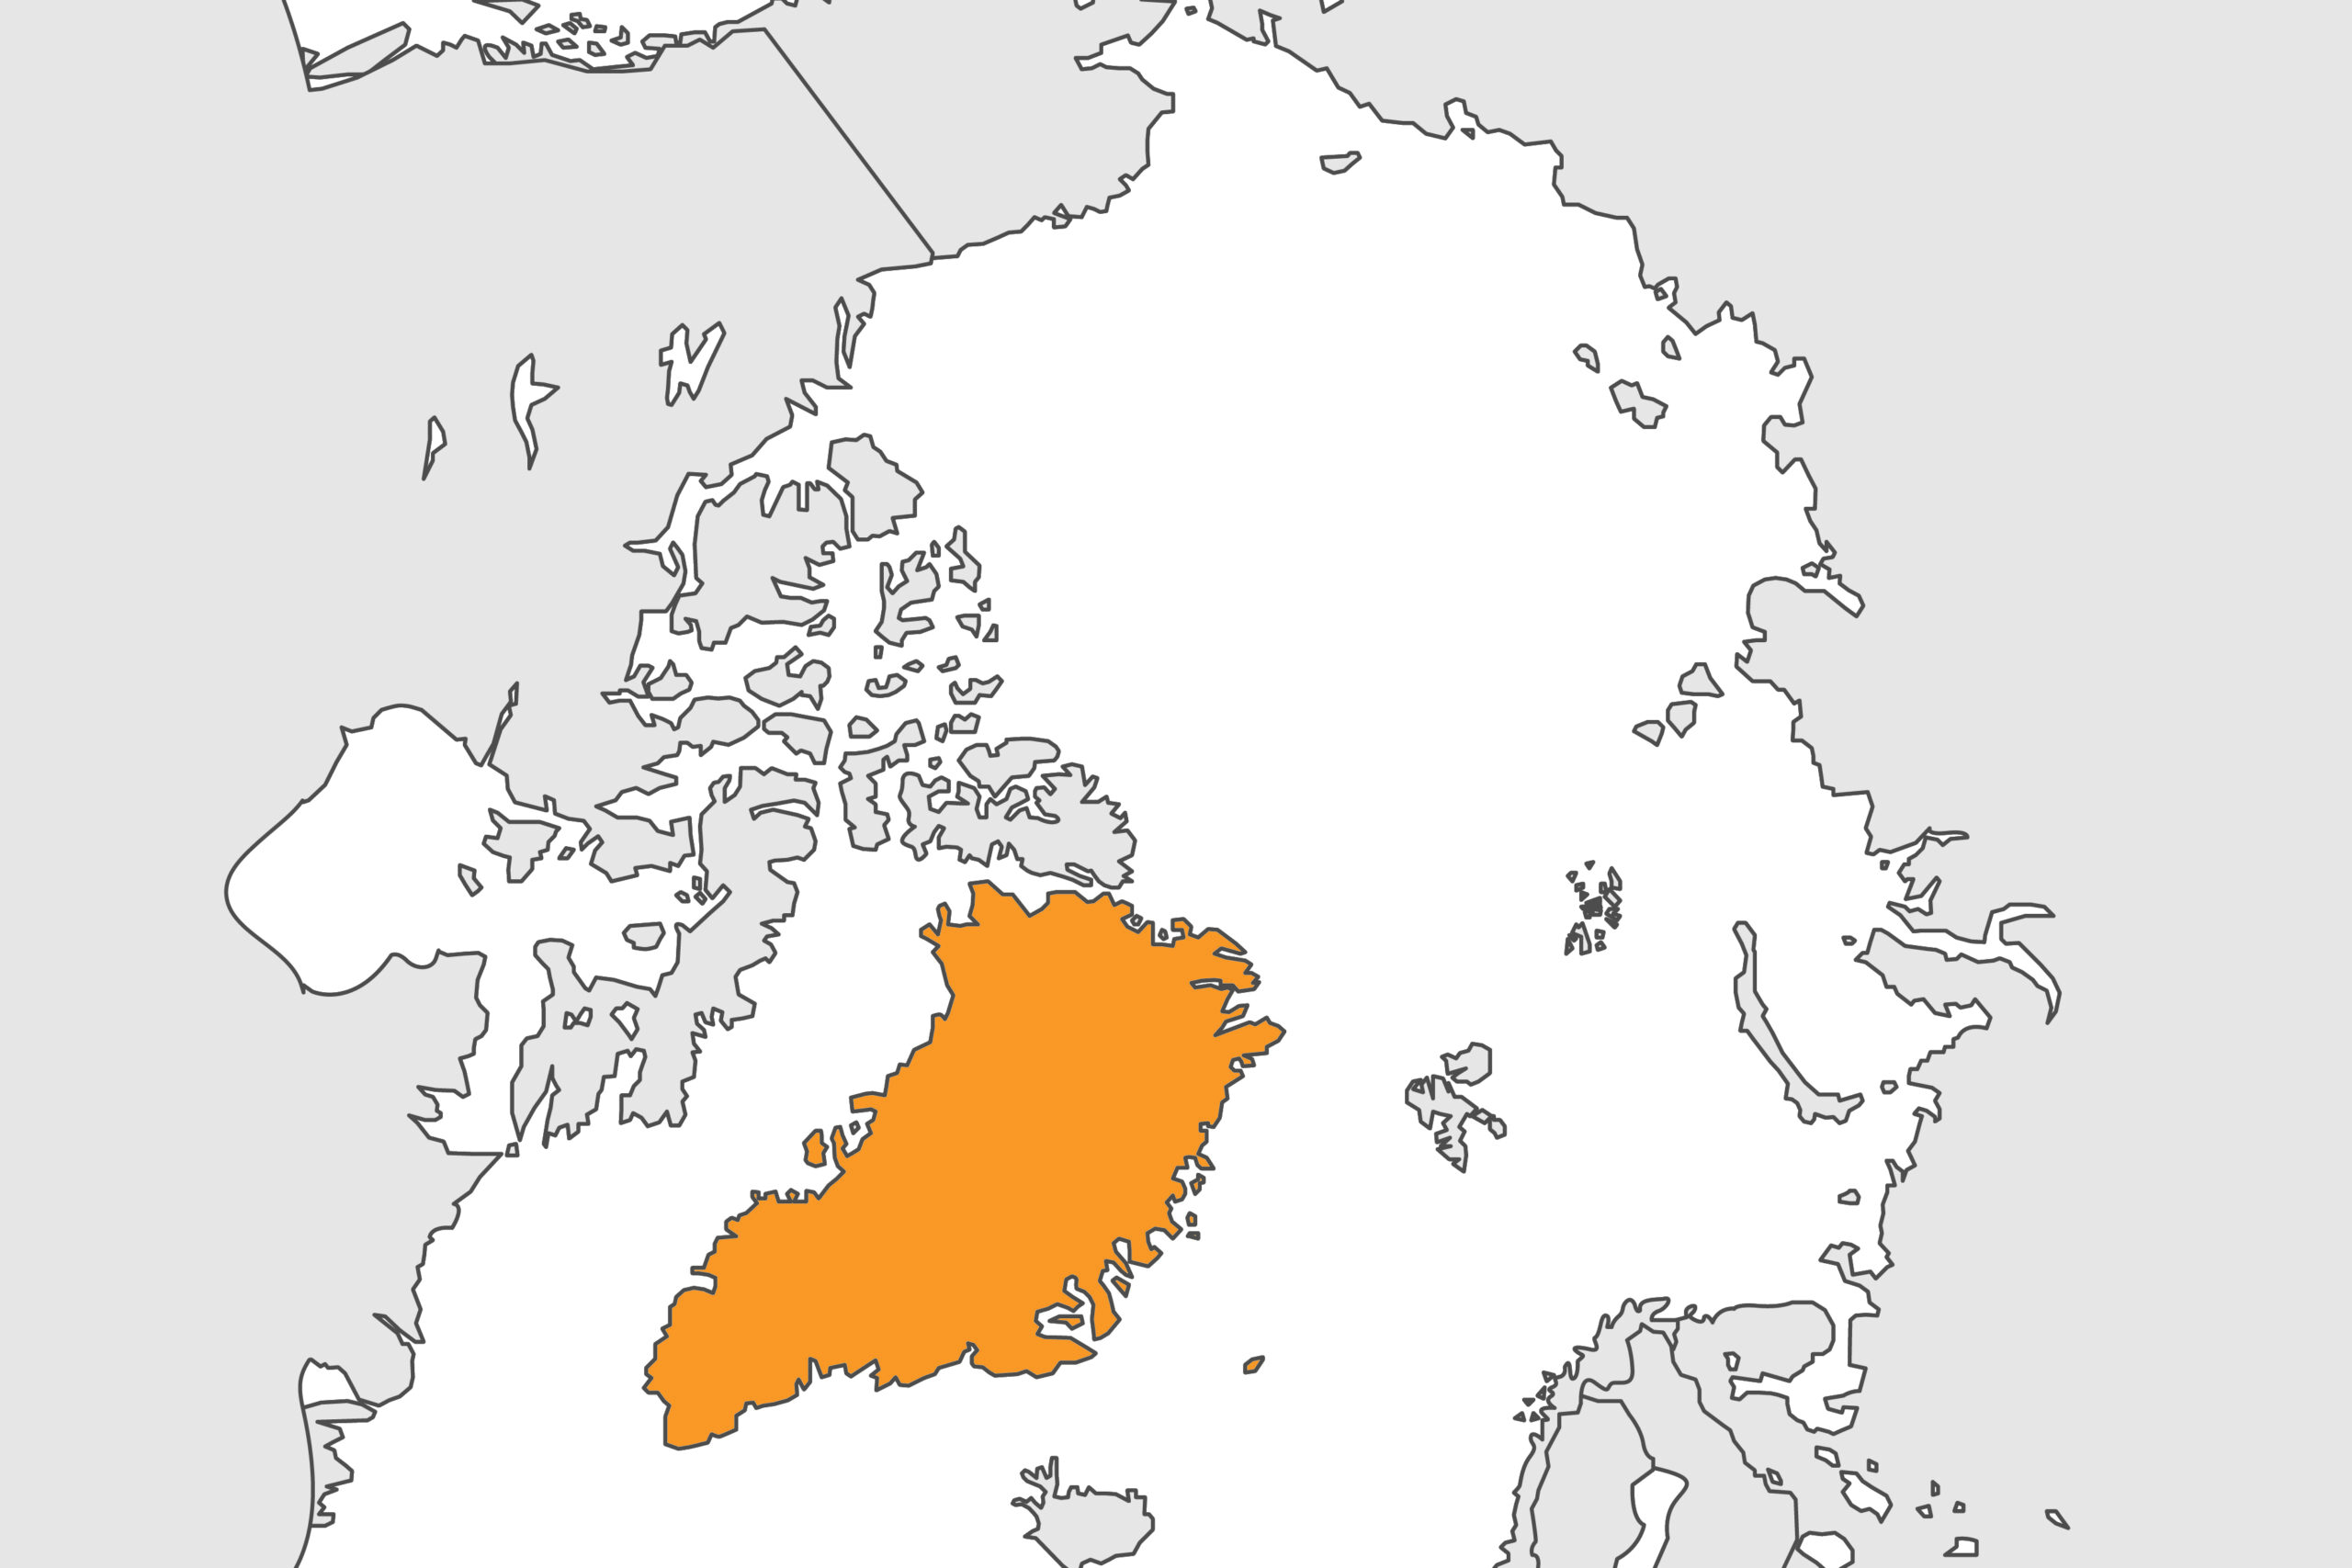 Greenland location map